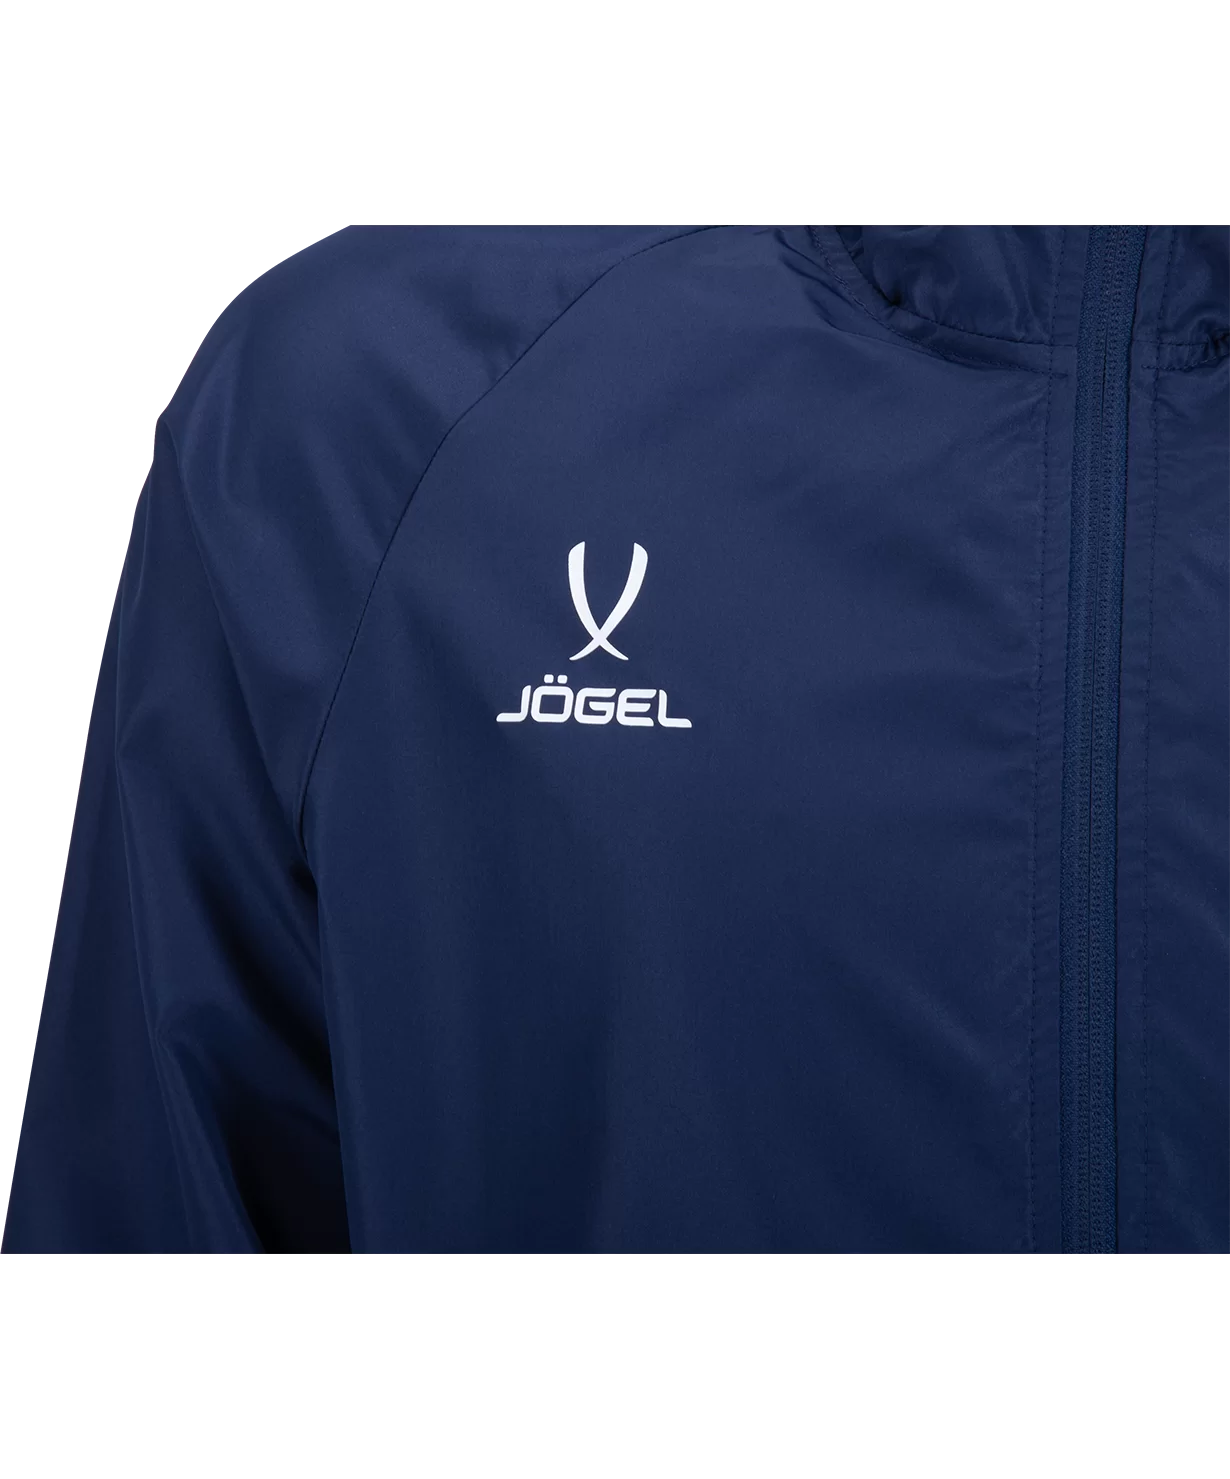 Реальное фото Куртка ветрозащитная CAMP Rain Jacket, темно-синий от магазина СпортСЕ